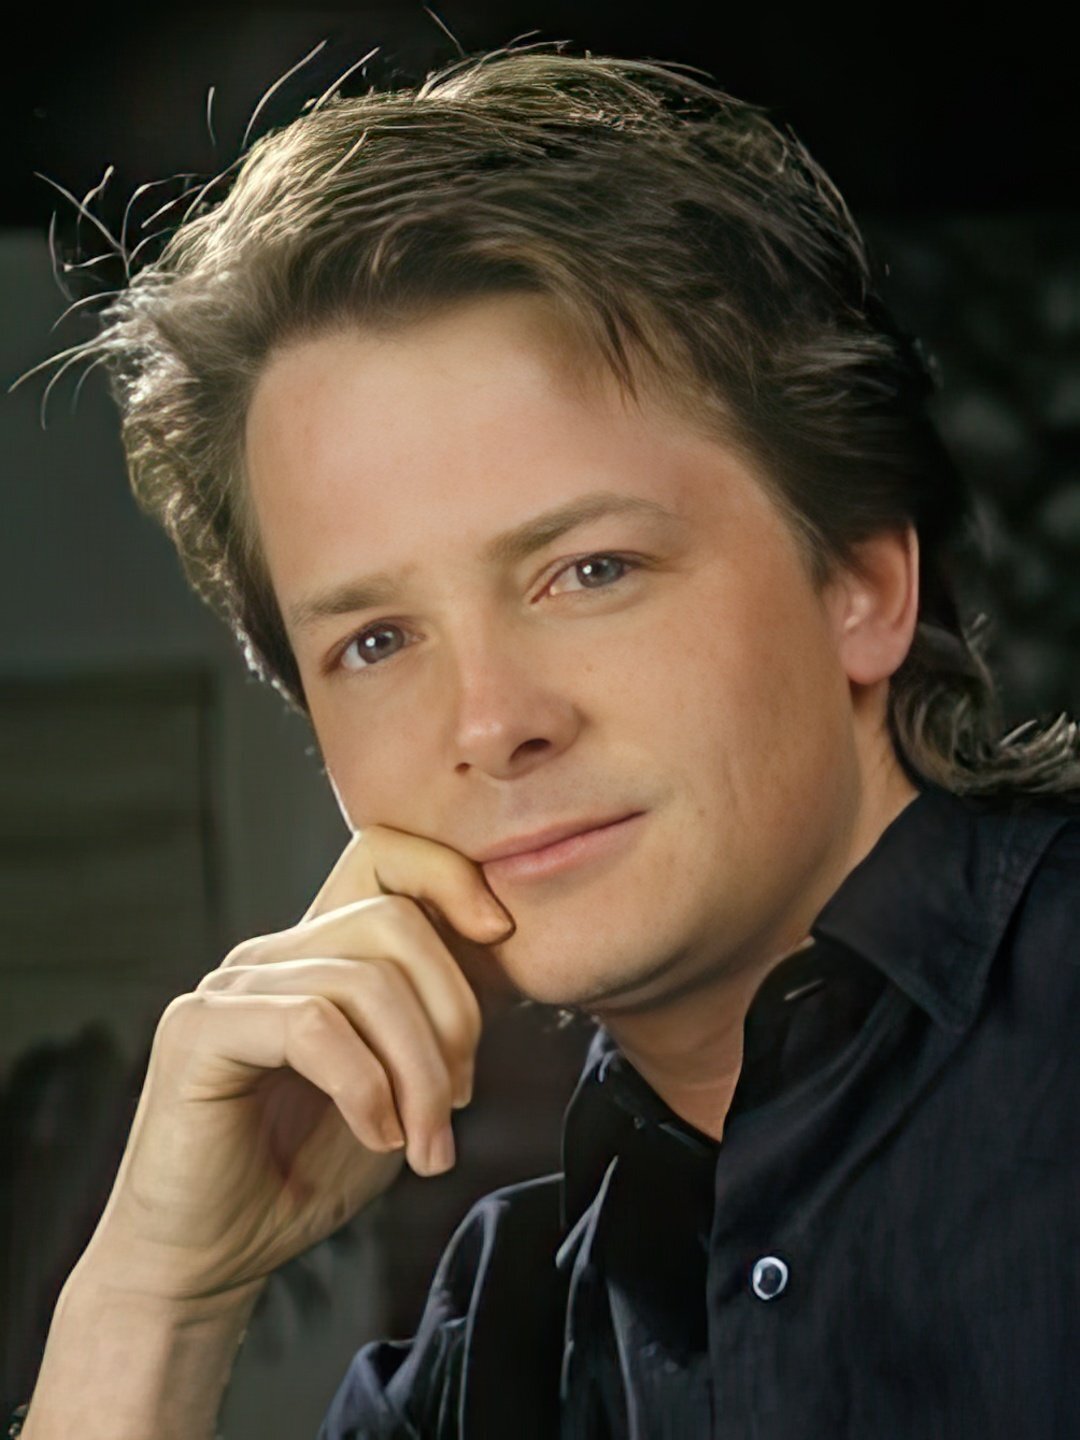 Michael J. Fox in real life